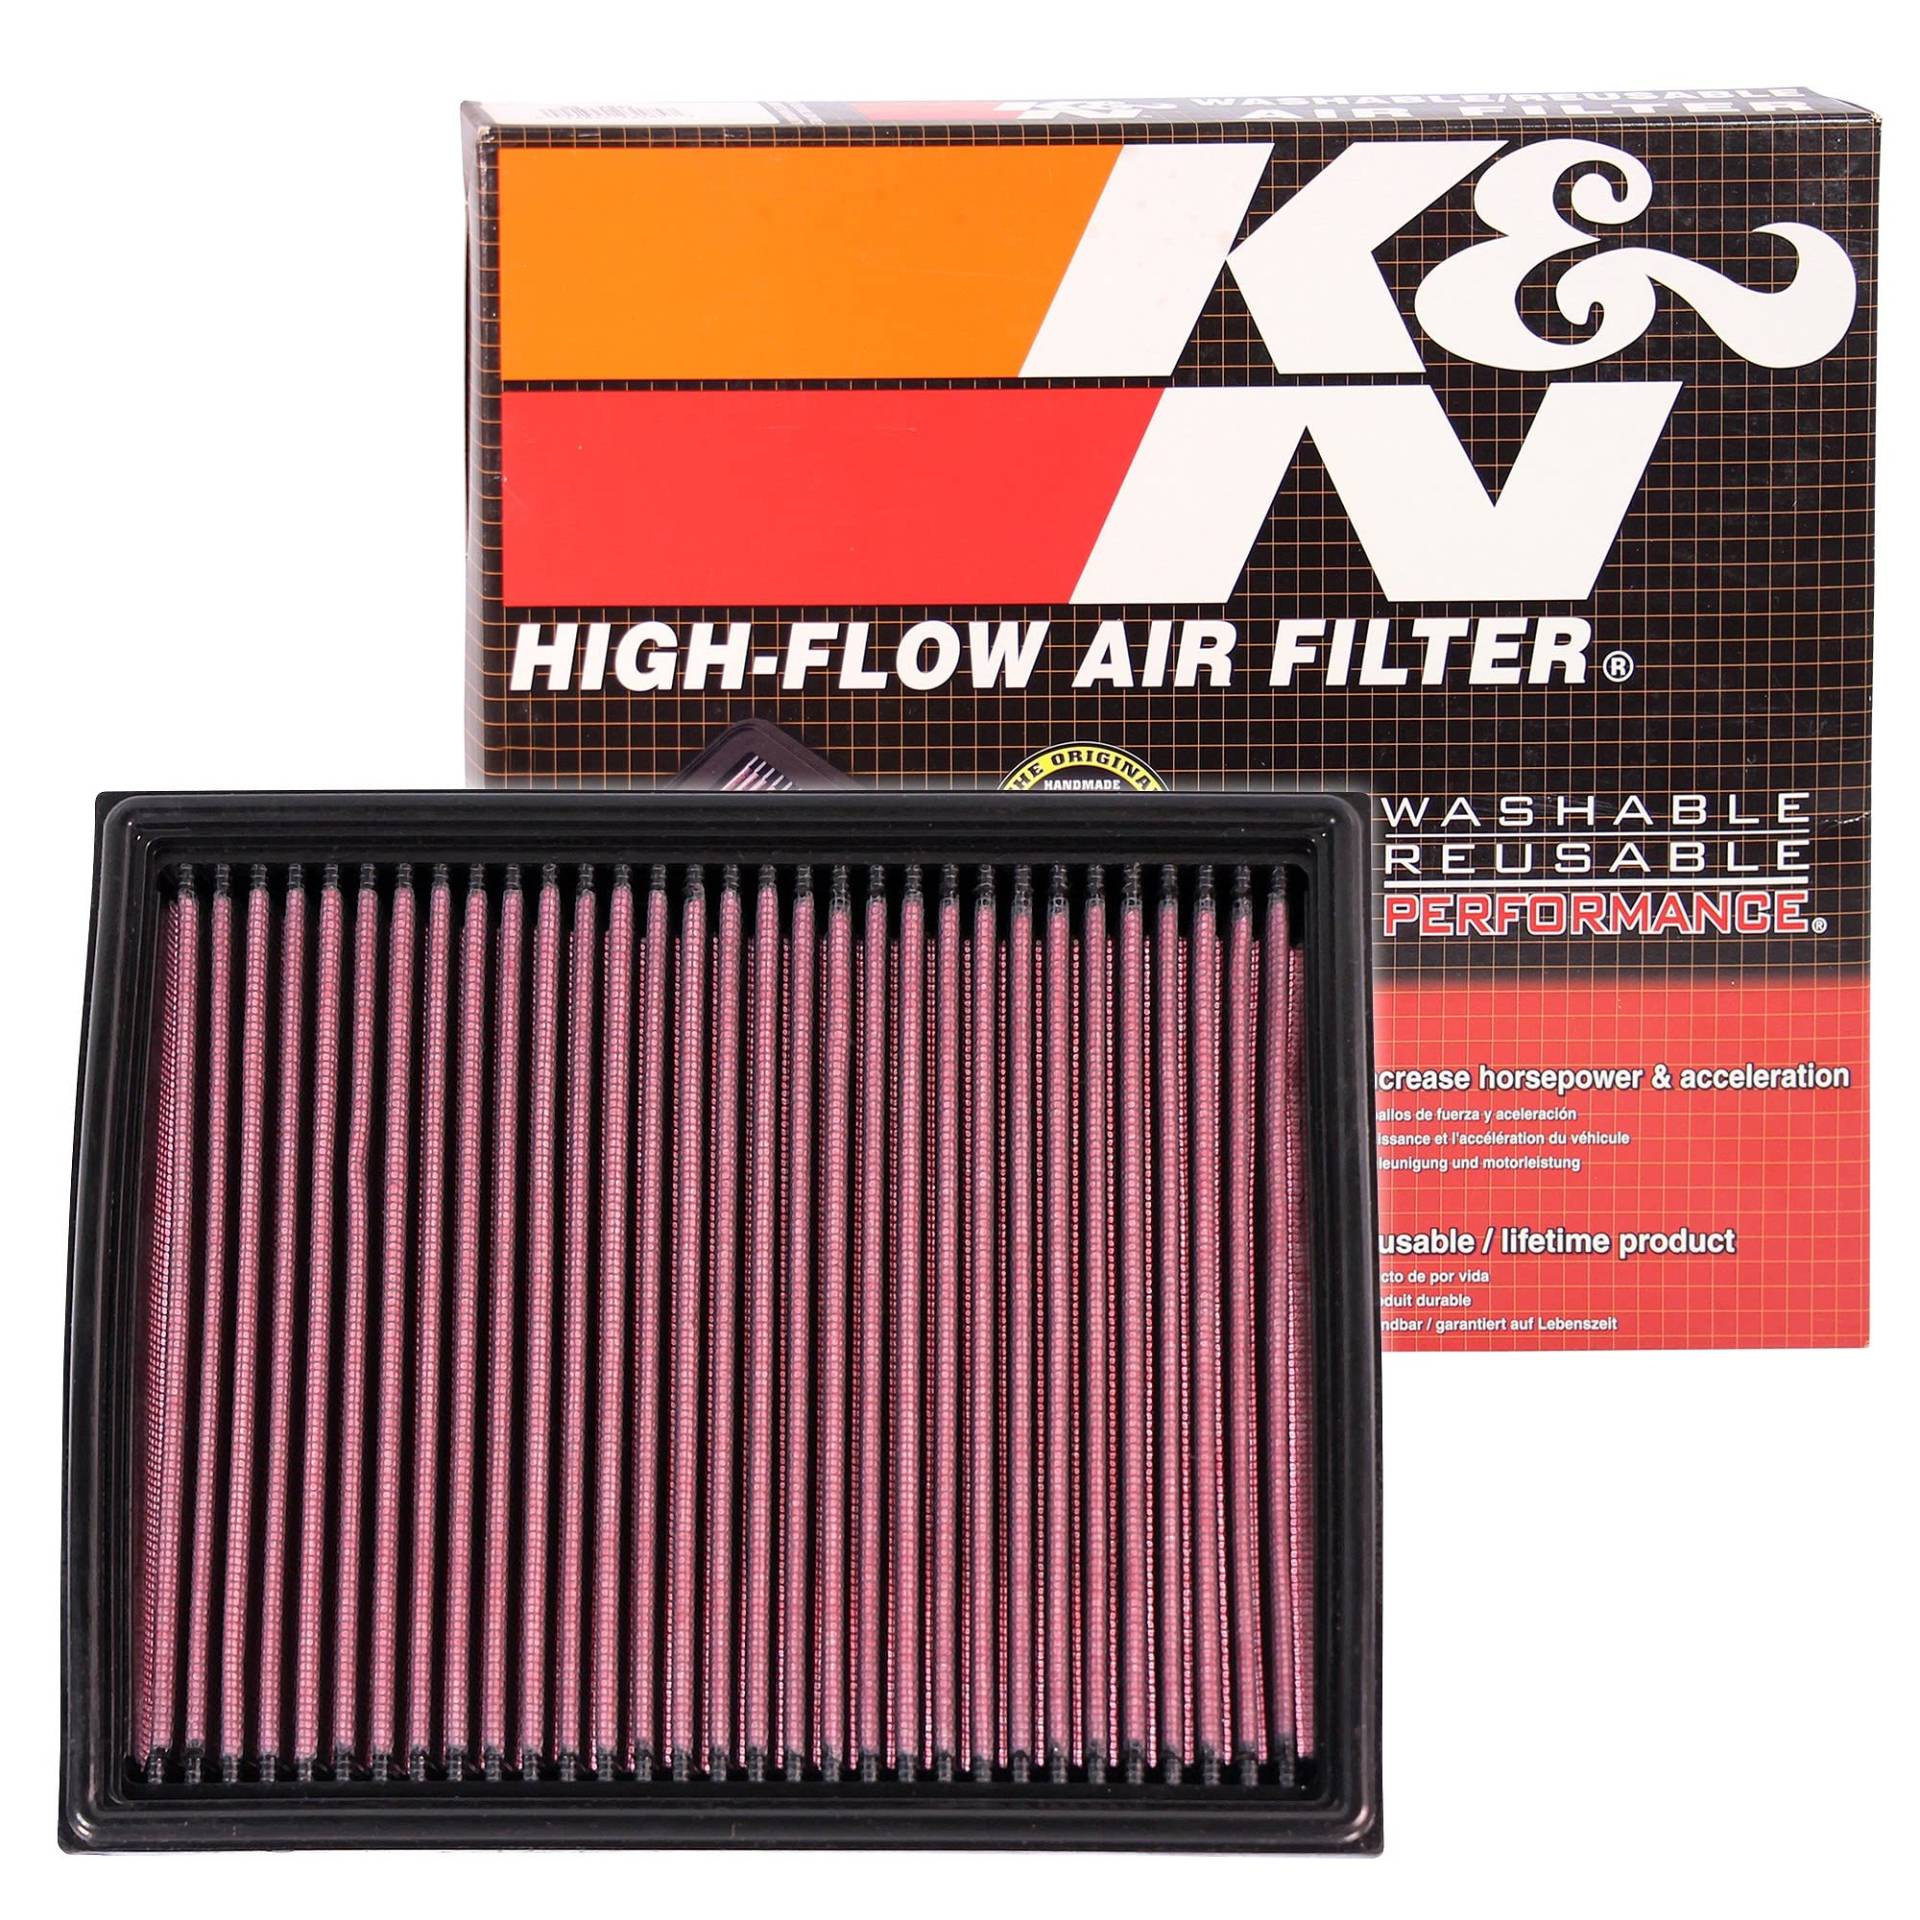 K&N 33-2767 Motorluftfilter: Hochleistung, Prämie, Abwaschbar, Ersatzfilter,Erhöhte Leistung, 1996-2004 (SLK200 Kompressor, SLK230, SLK200) von K&N